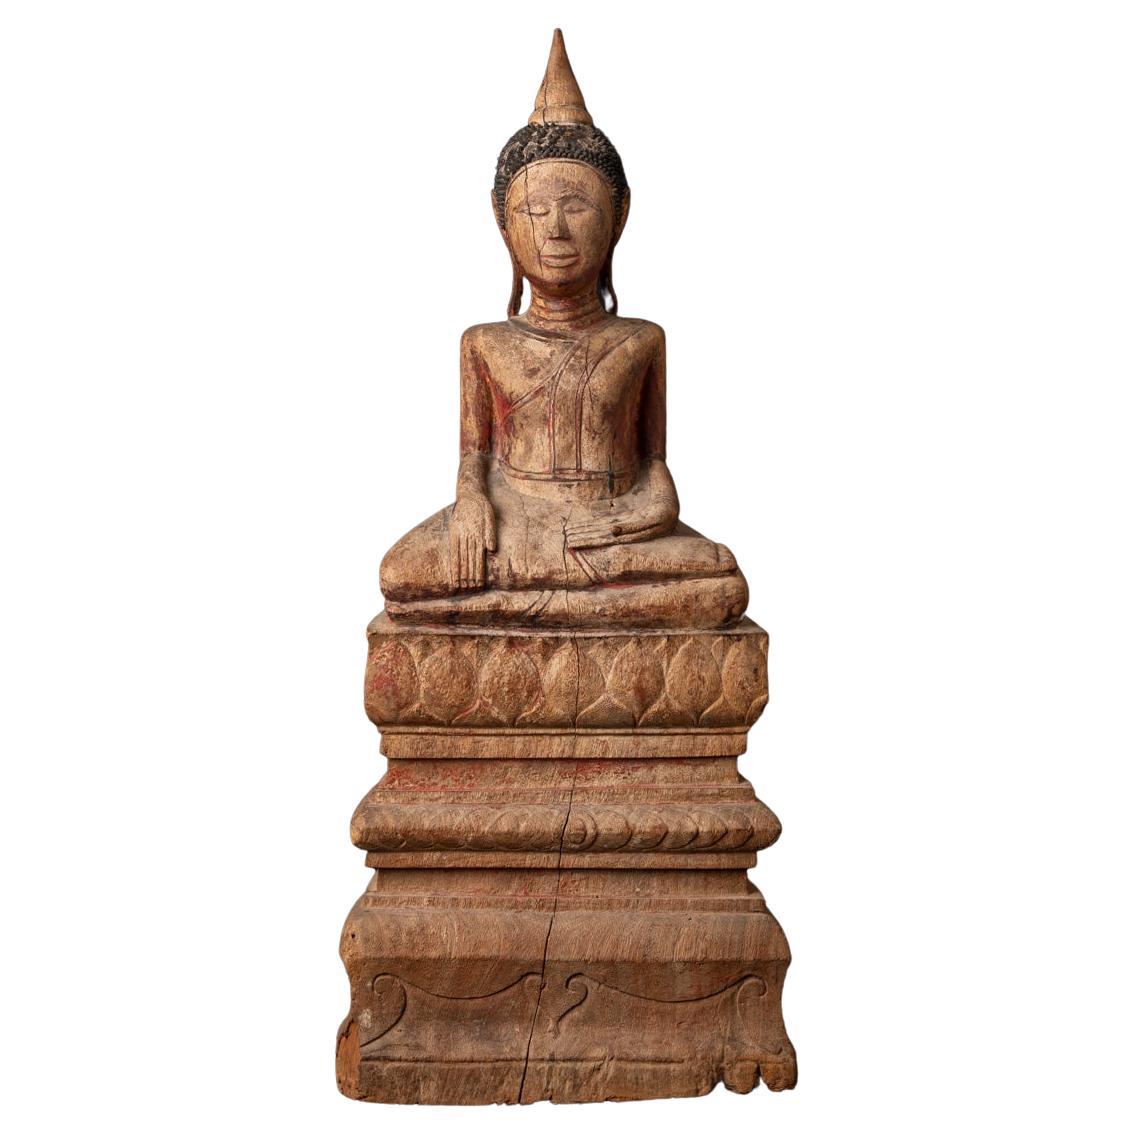 18th century antique wooden Buddha statue from Cambodia in Bhumisparsha mudra